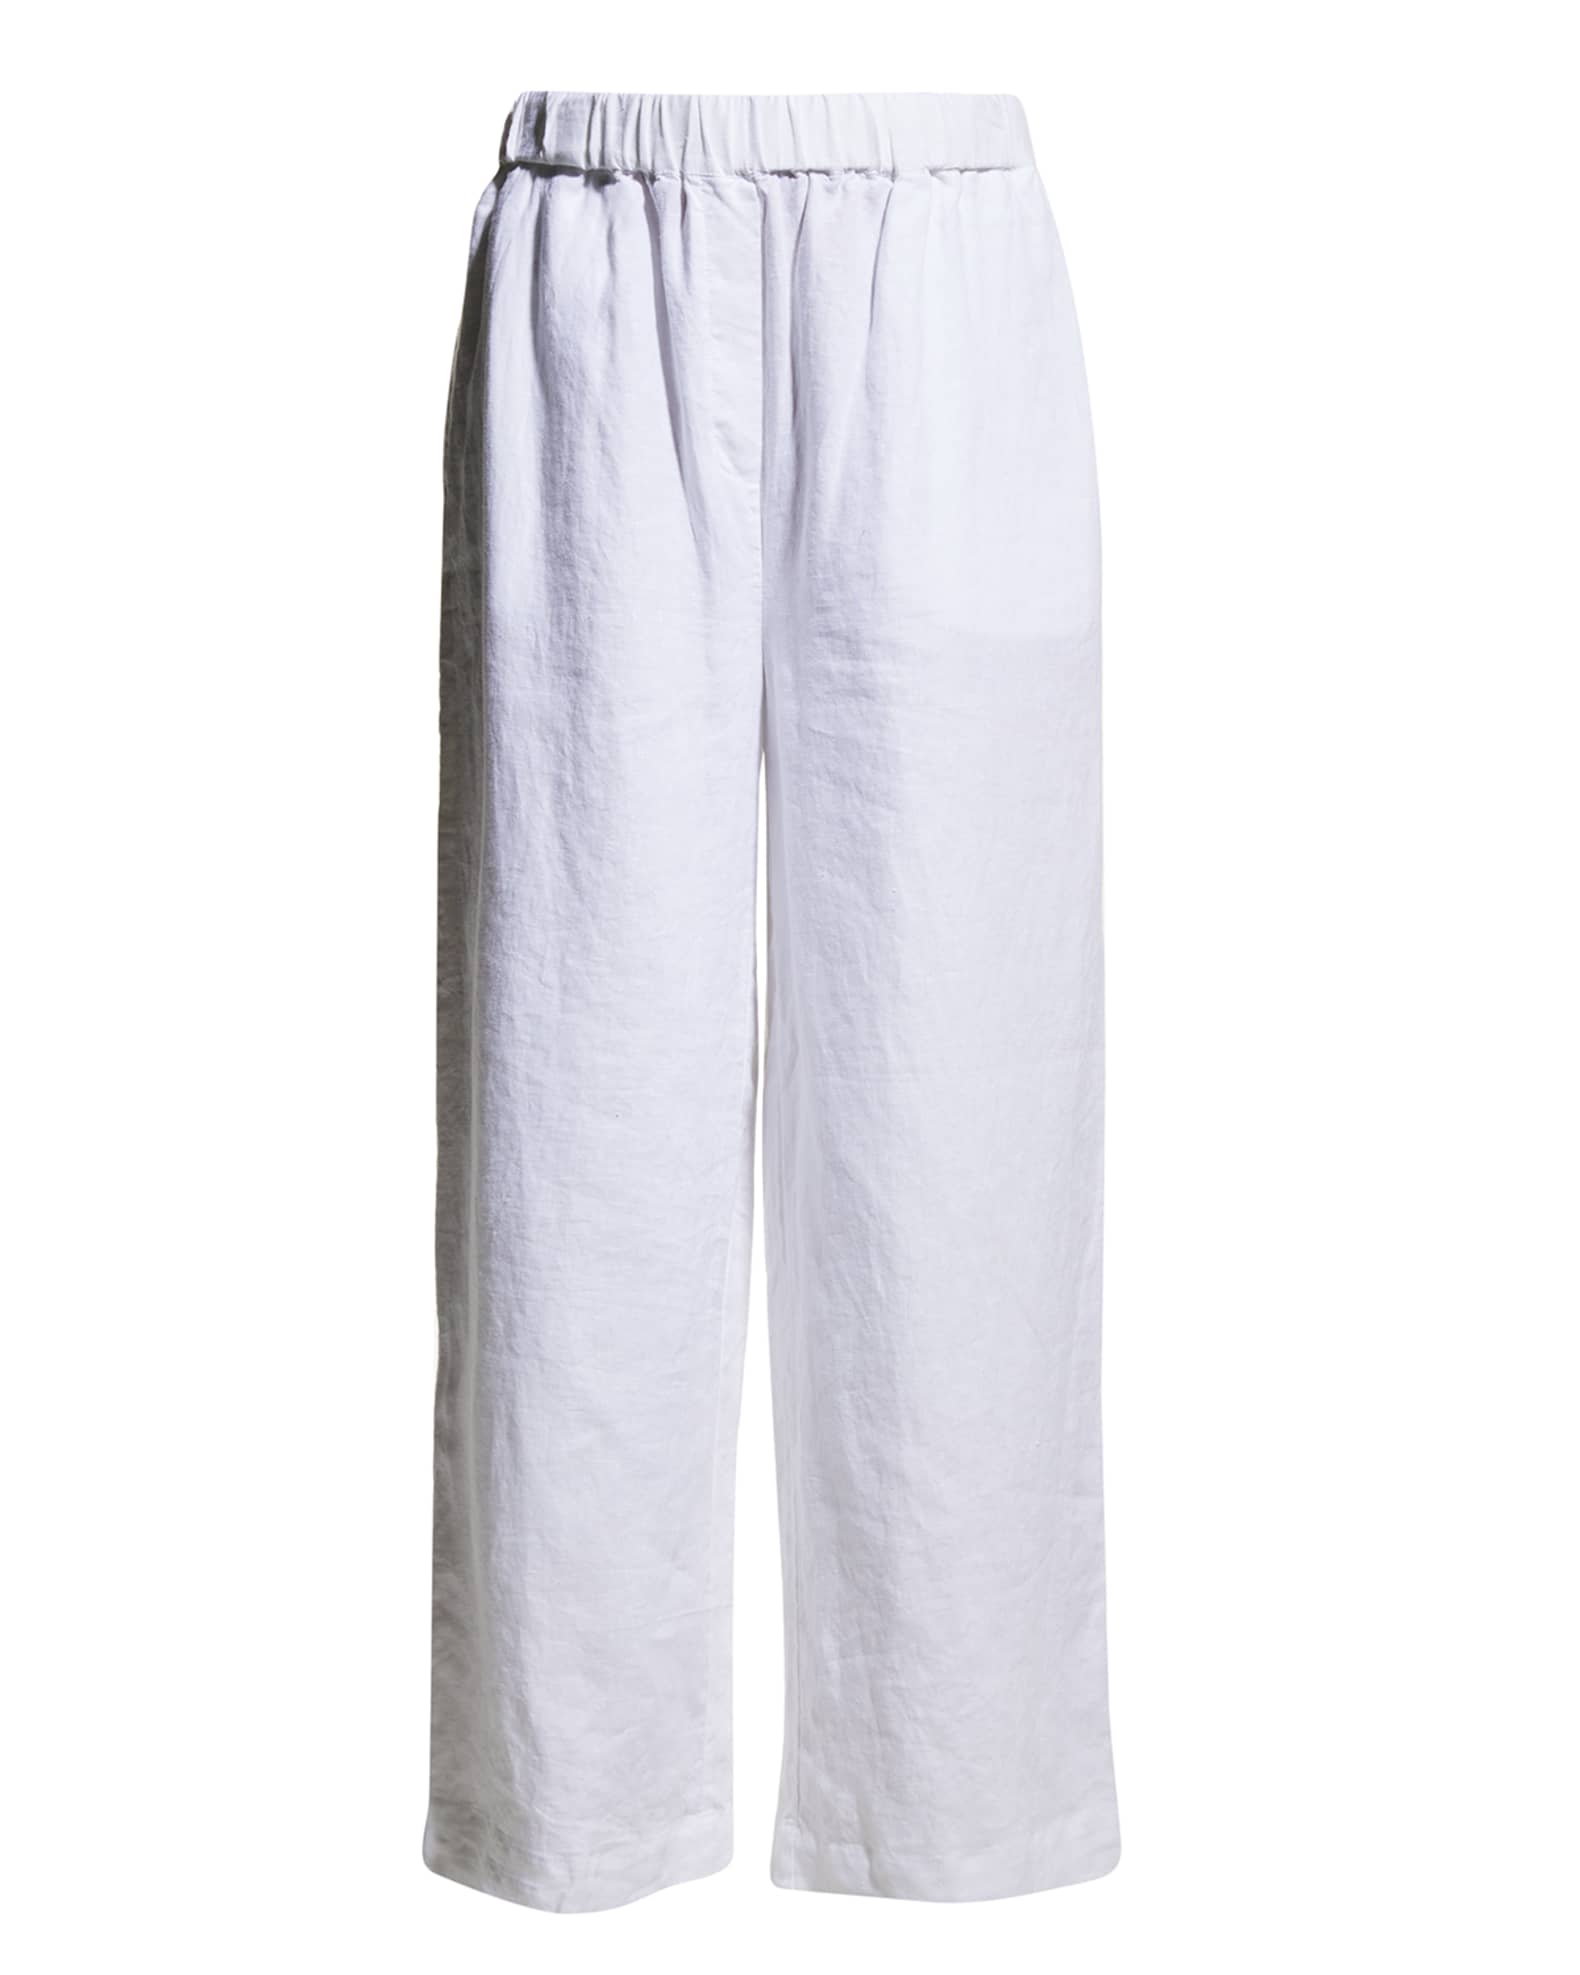 Masai Parini Linen Pull-On Trousers | Neiman Marcus